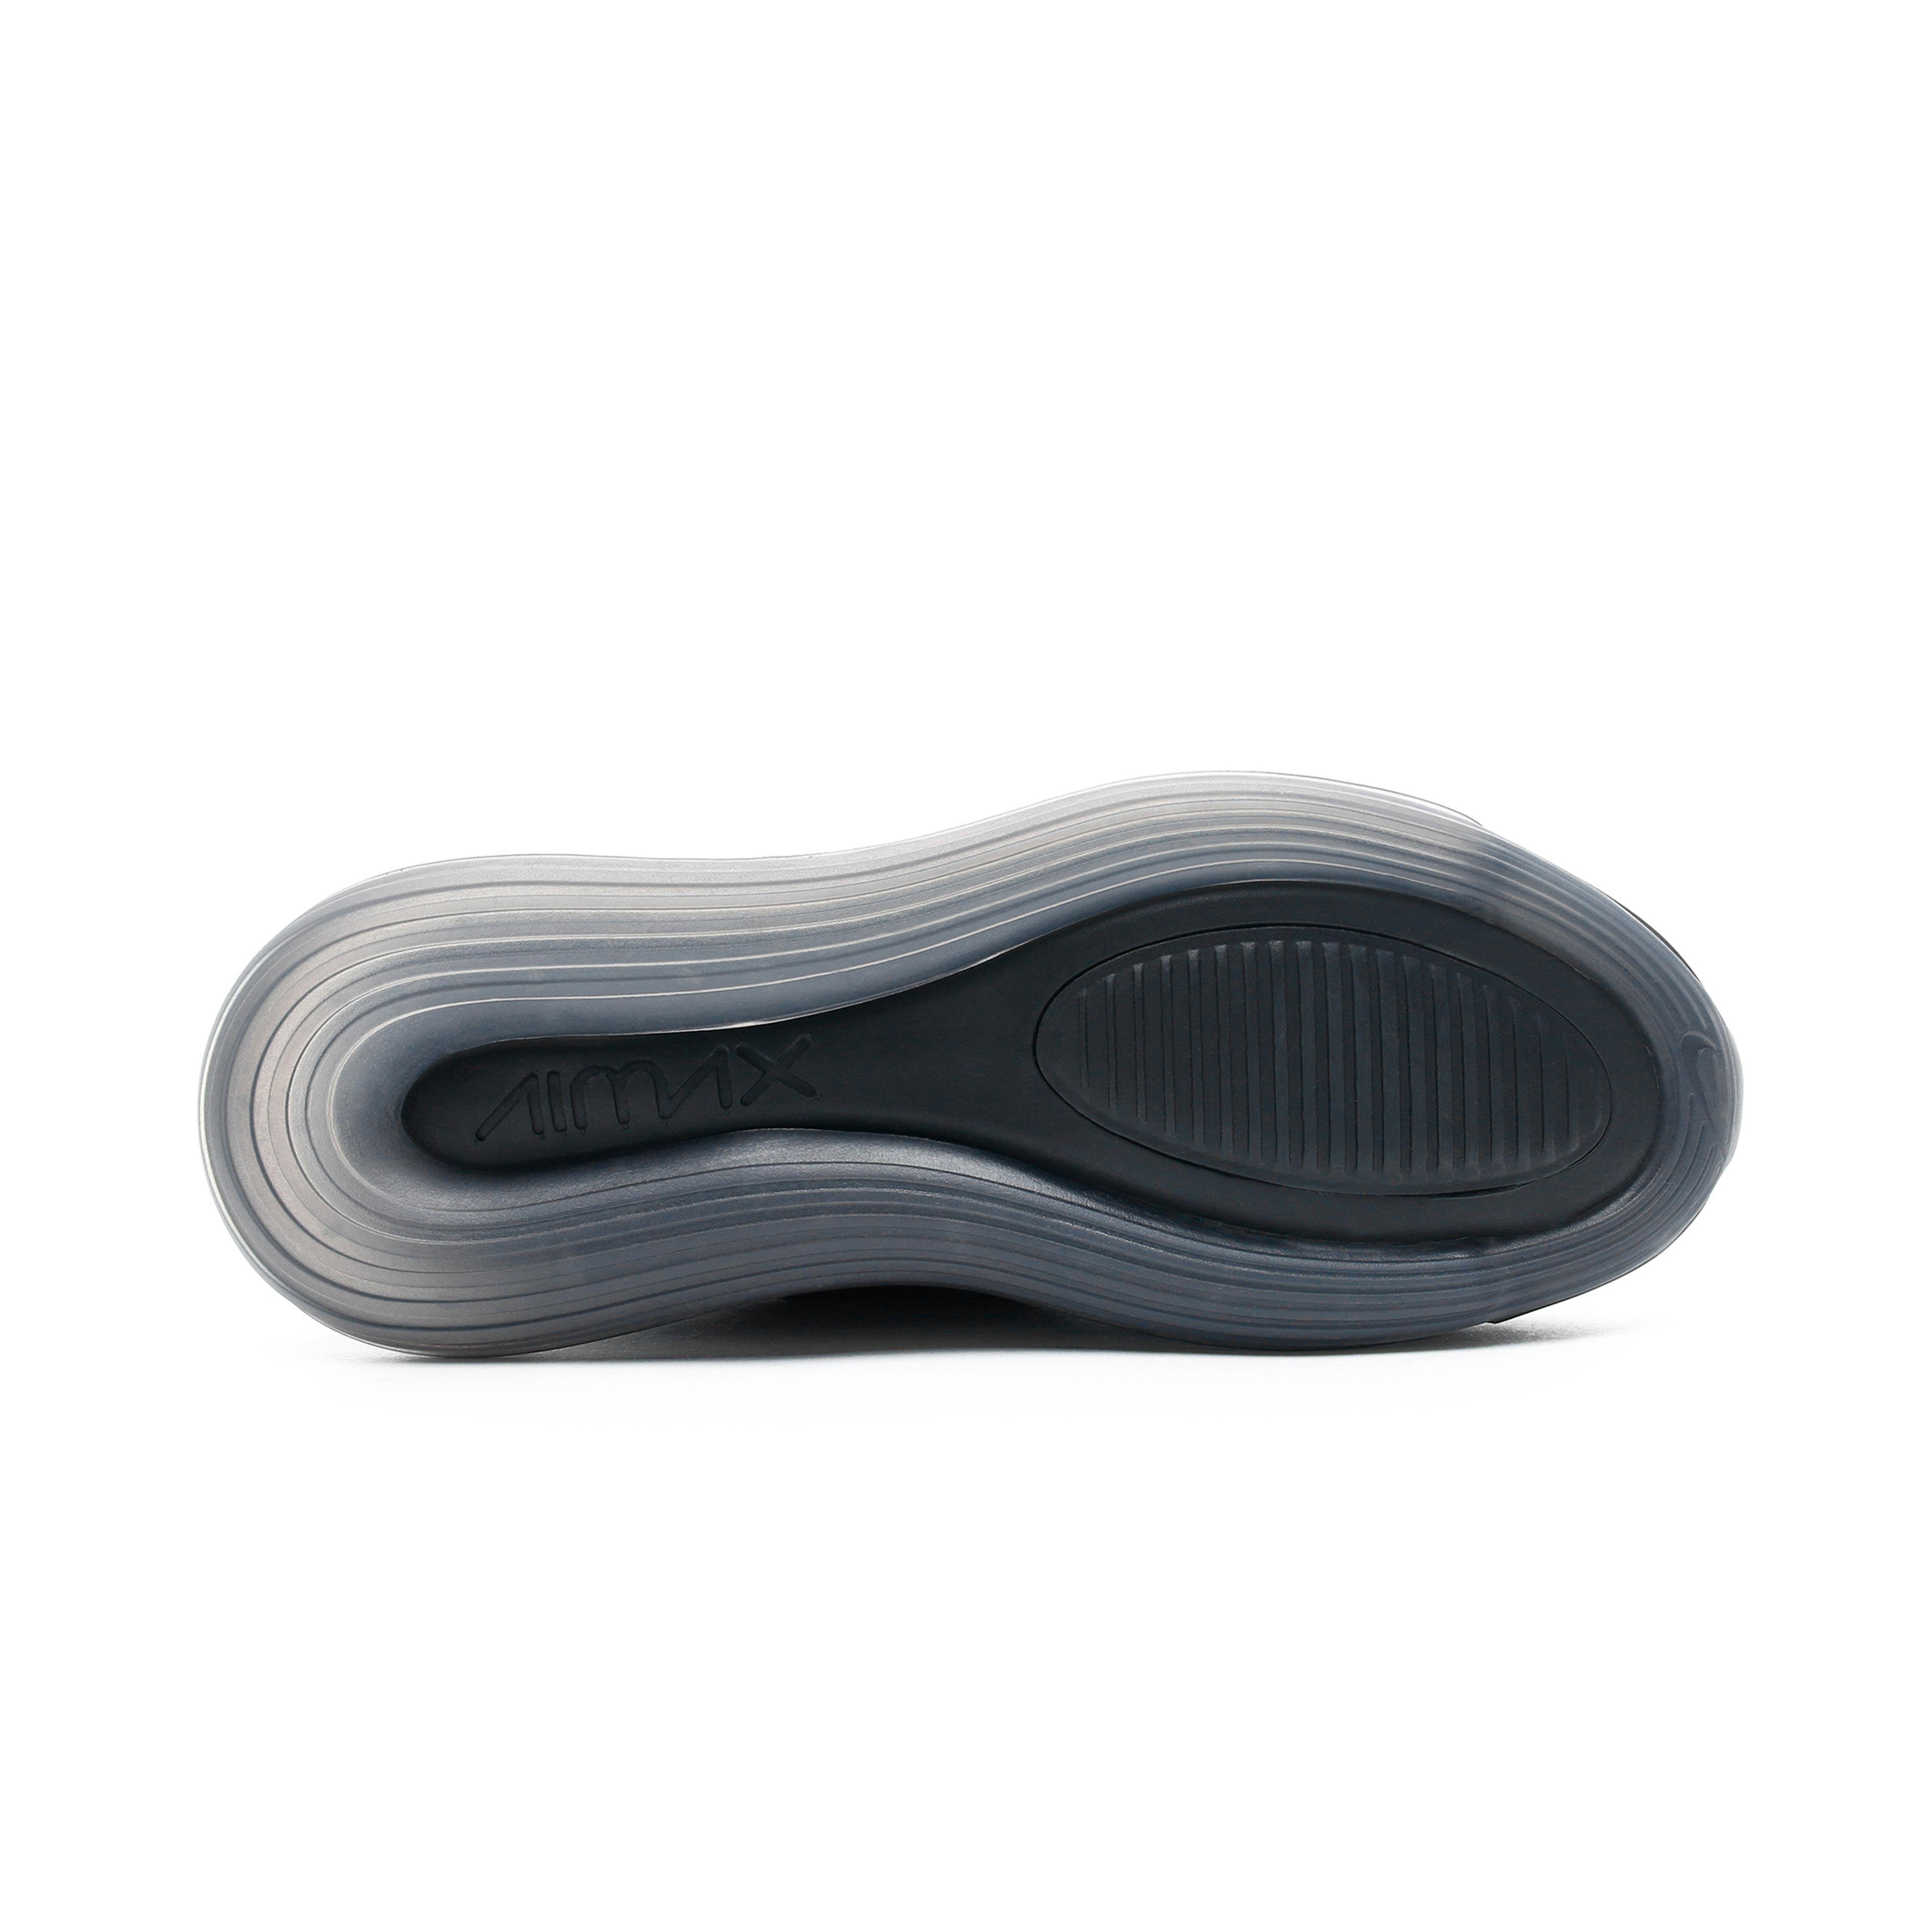 Nike Air Max 720 Siyah Unisex Spor Ayakkabı